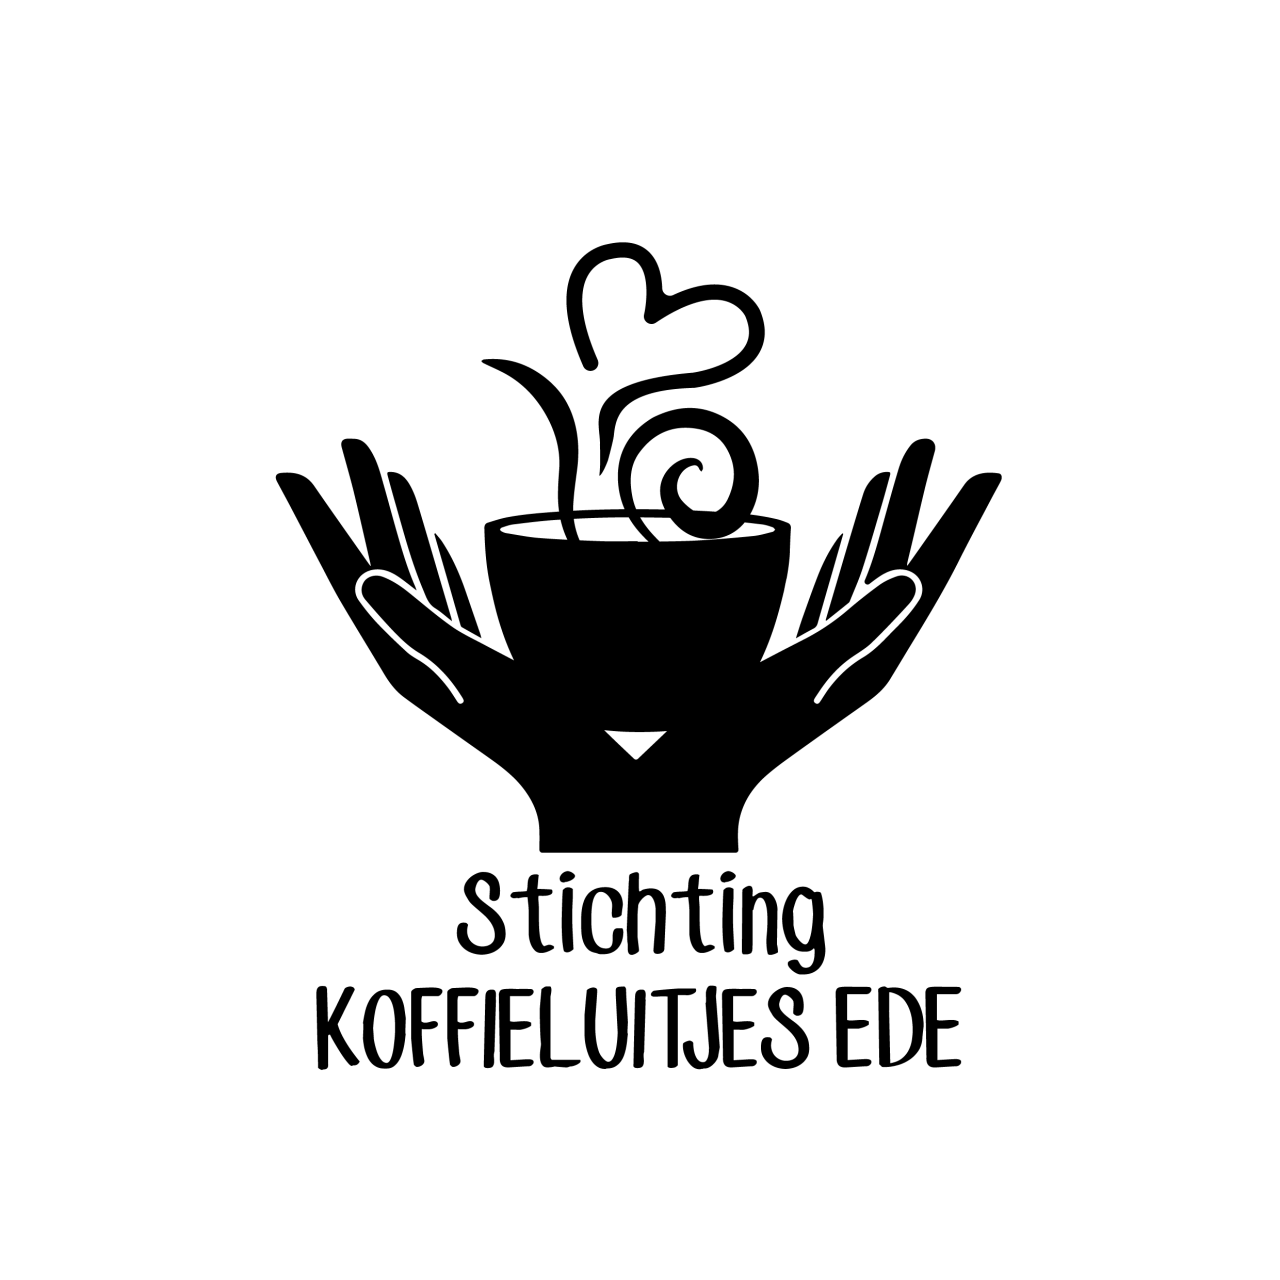 Koffieluitjes Zwarte logo-01.png